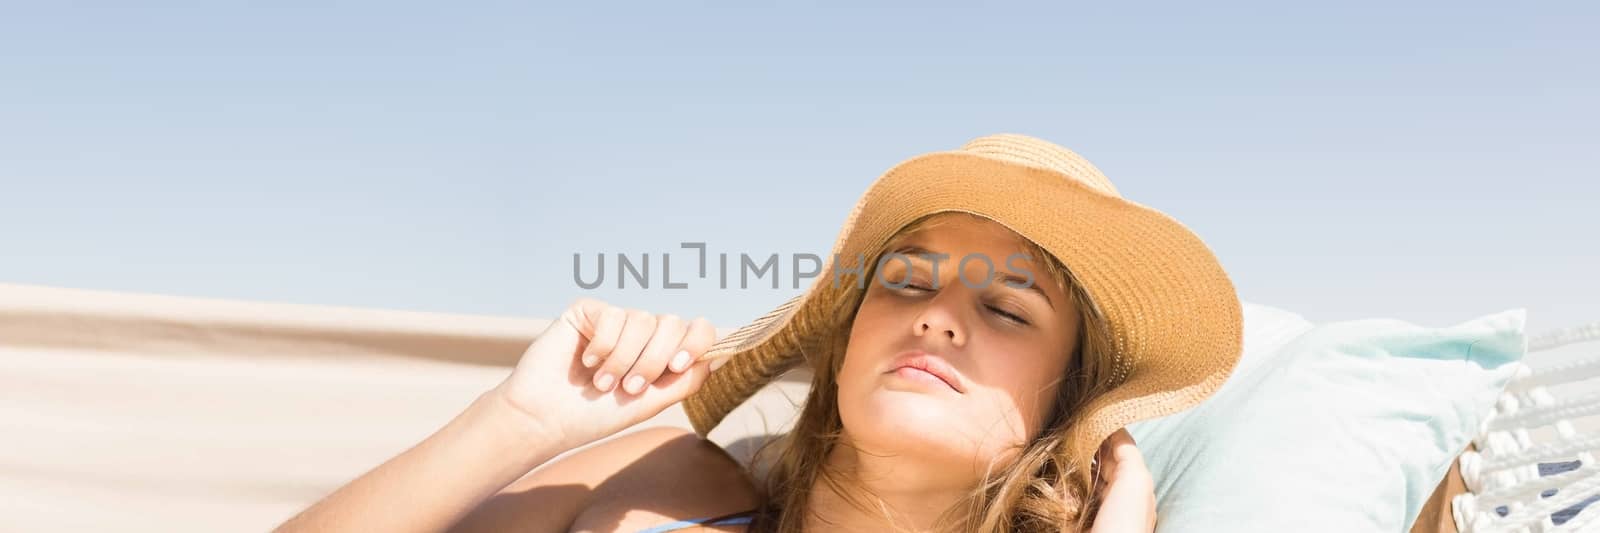 Millennial woman with sun hat asleep on hamoc against Summer sky by Wavebreakmedia